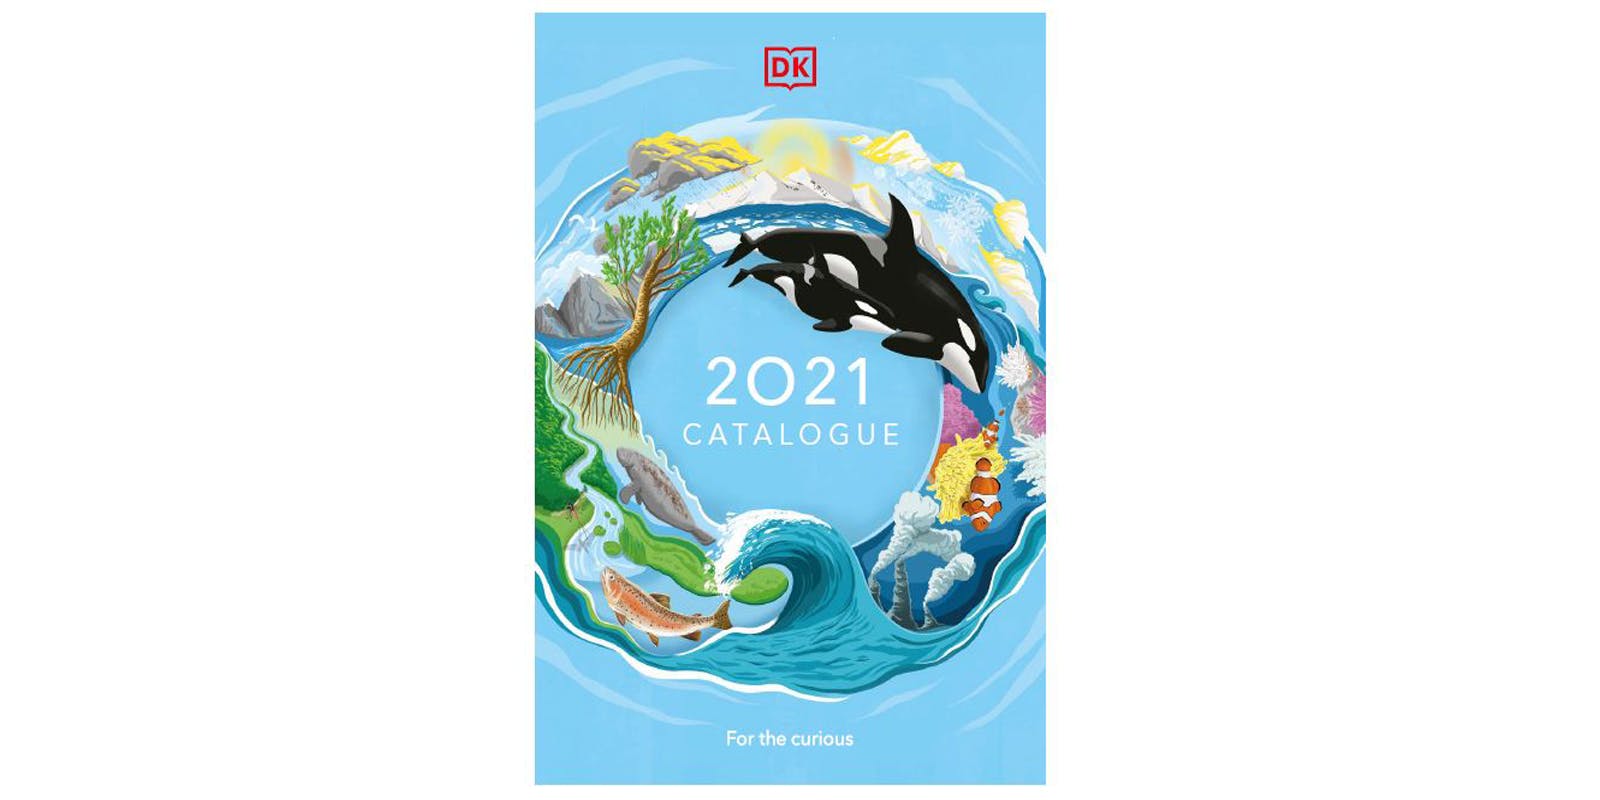 DK Catalogue 2021